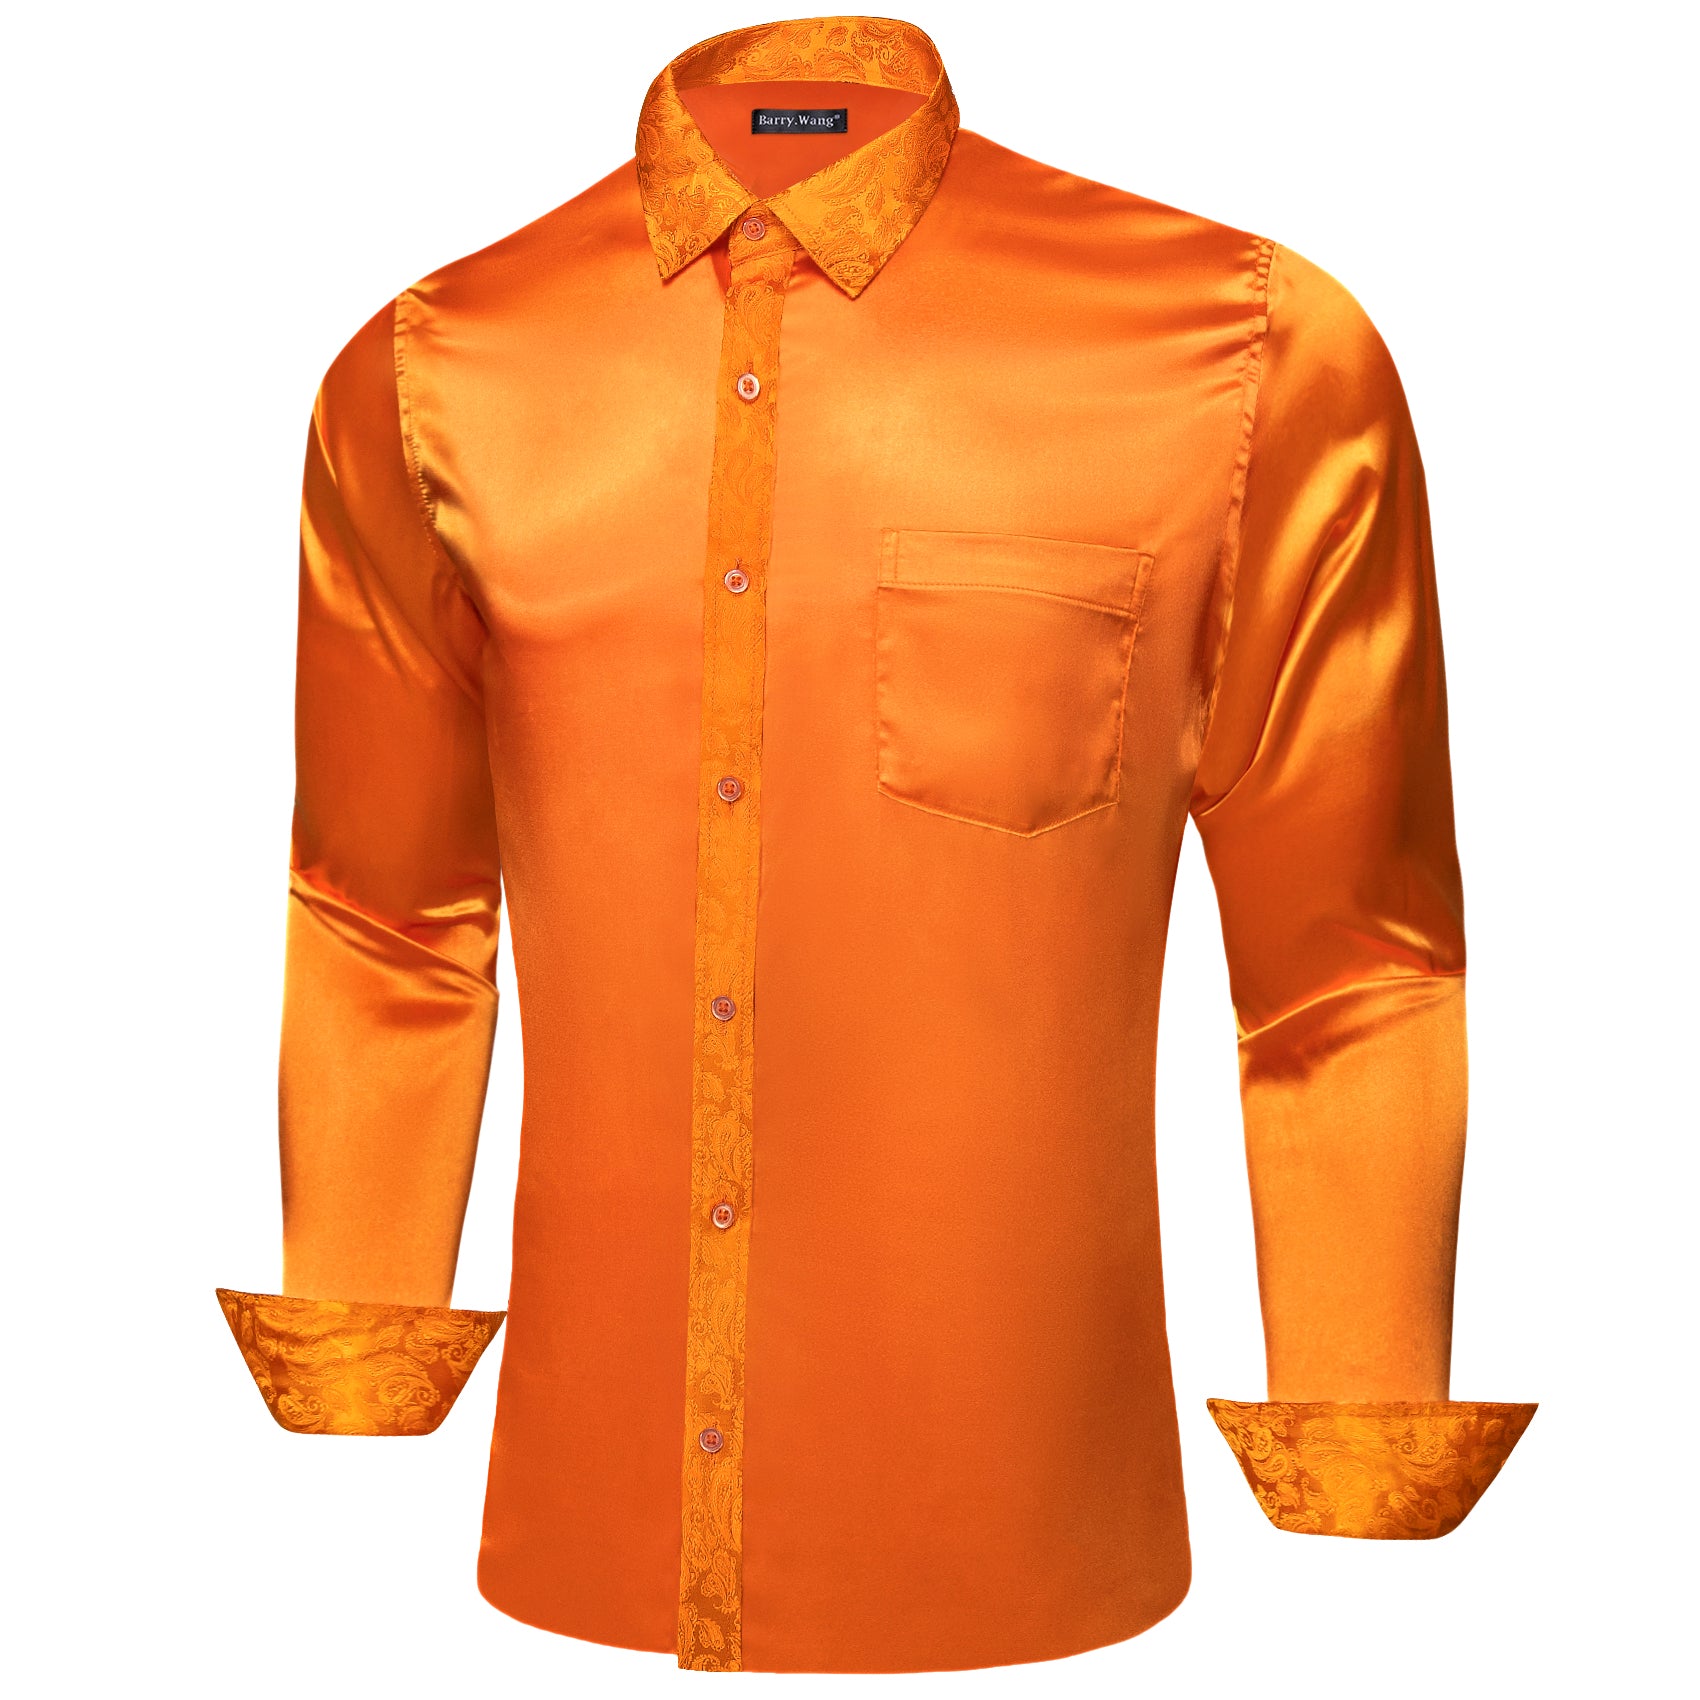 Barry.wang Orange Solid Men's Shirt